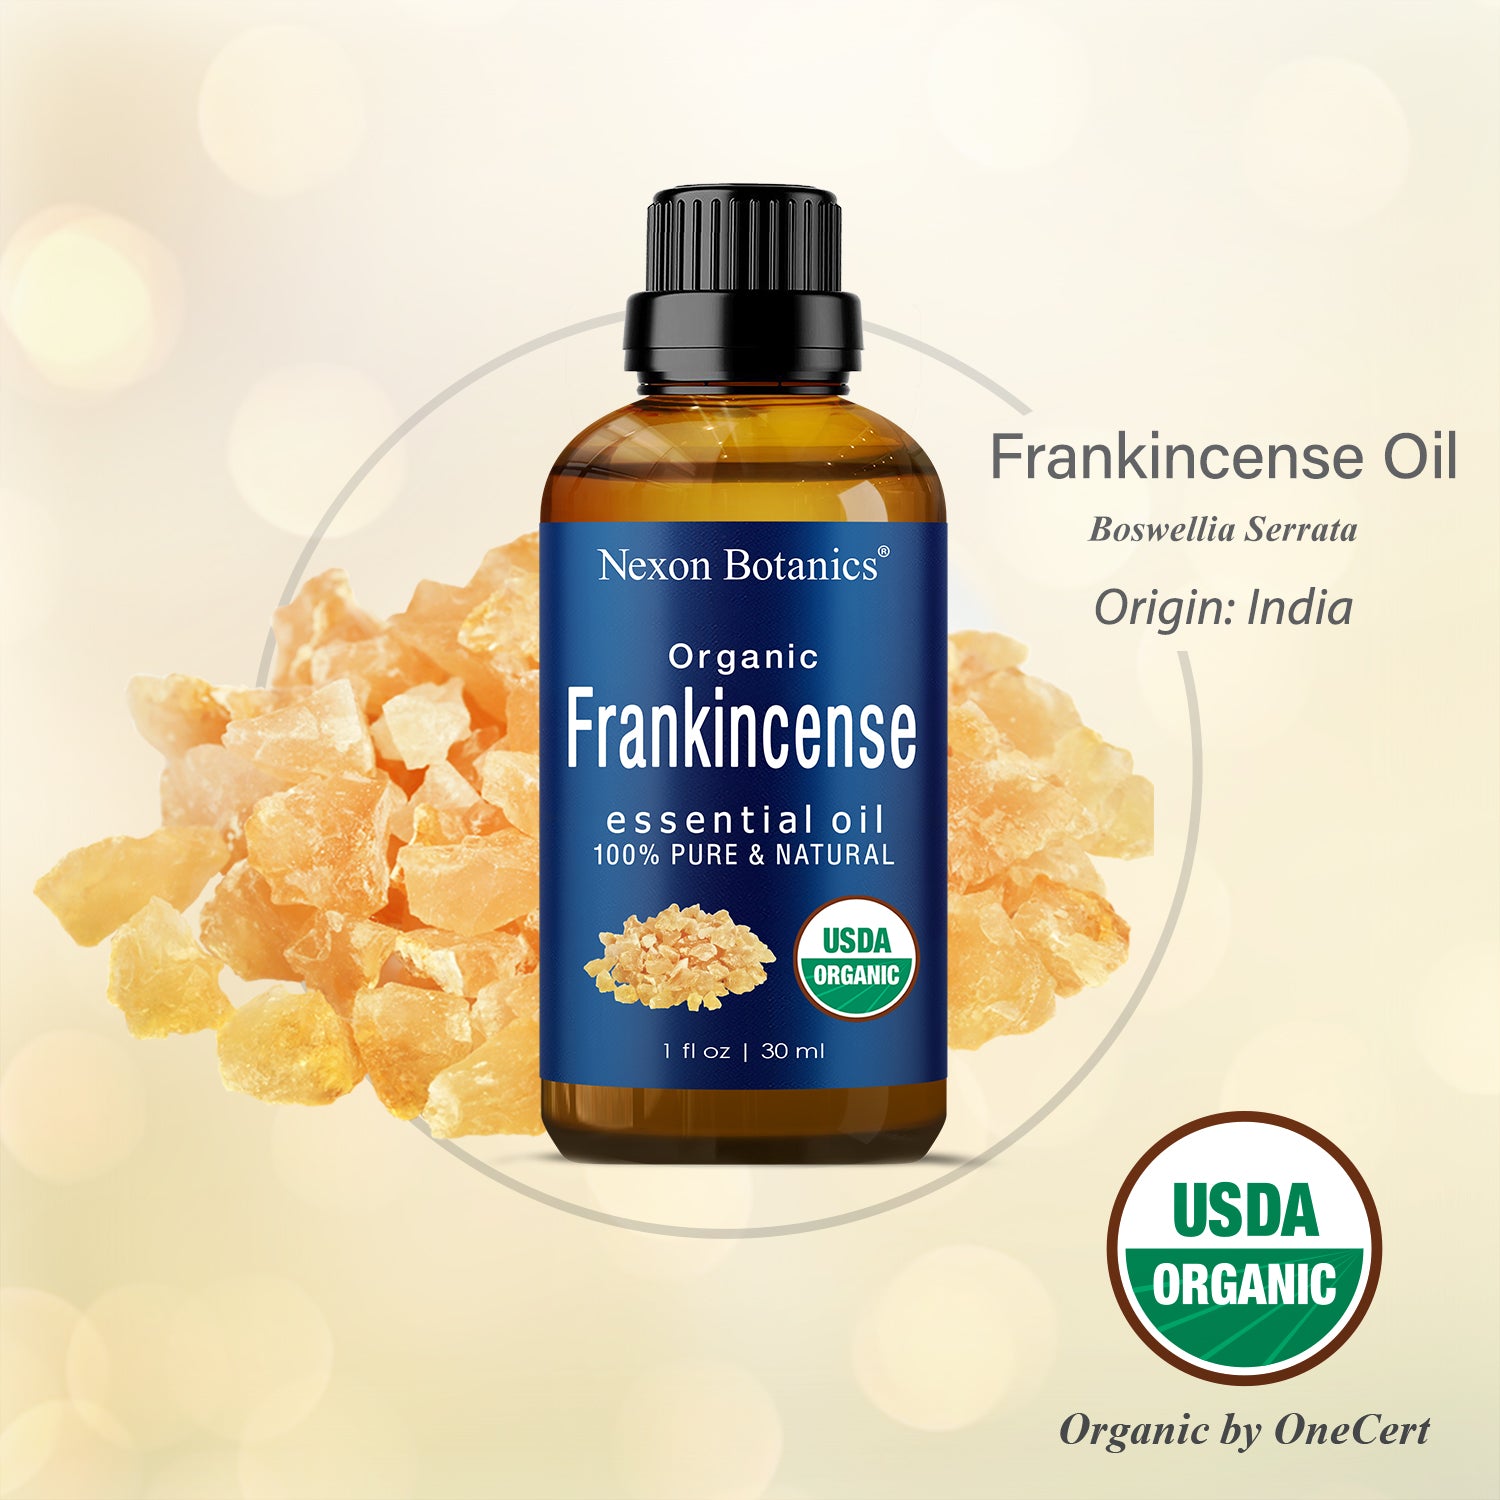 Plant Therapy USDA Certified Organic Frankincense Serrata Essential Oil. 100%